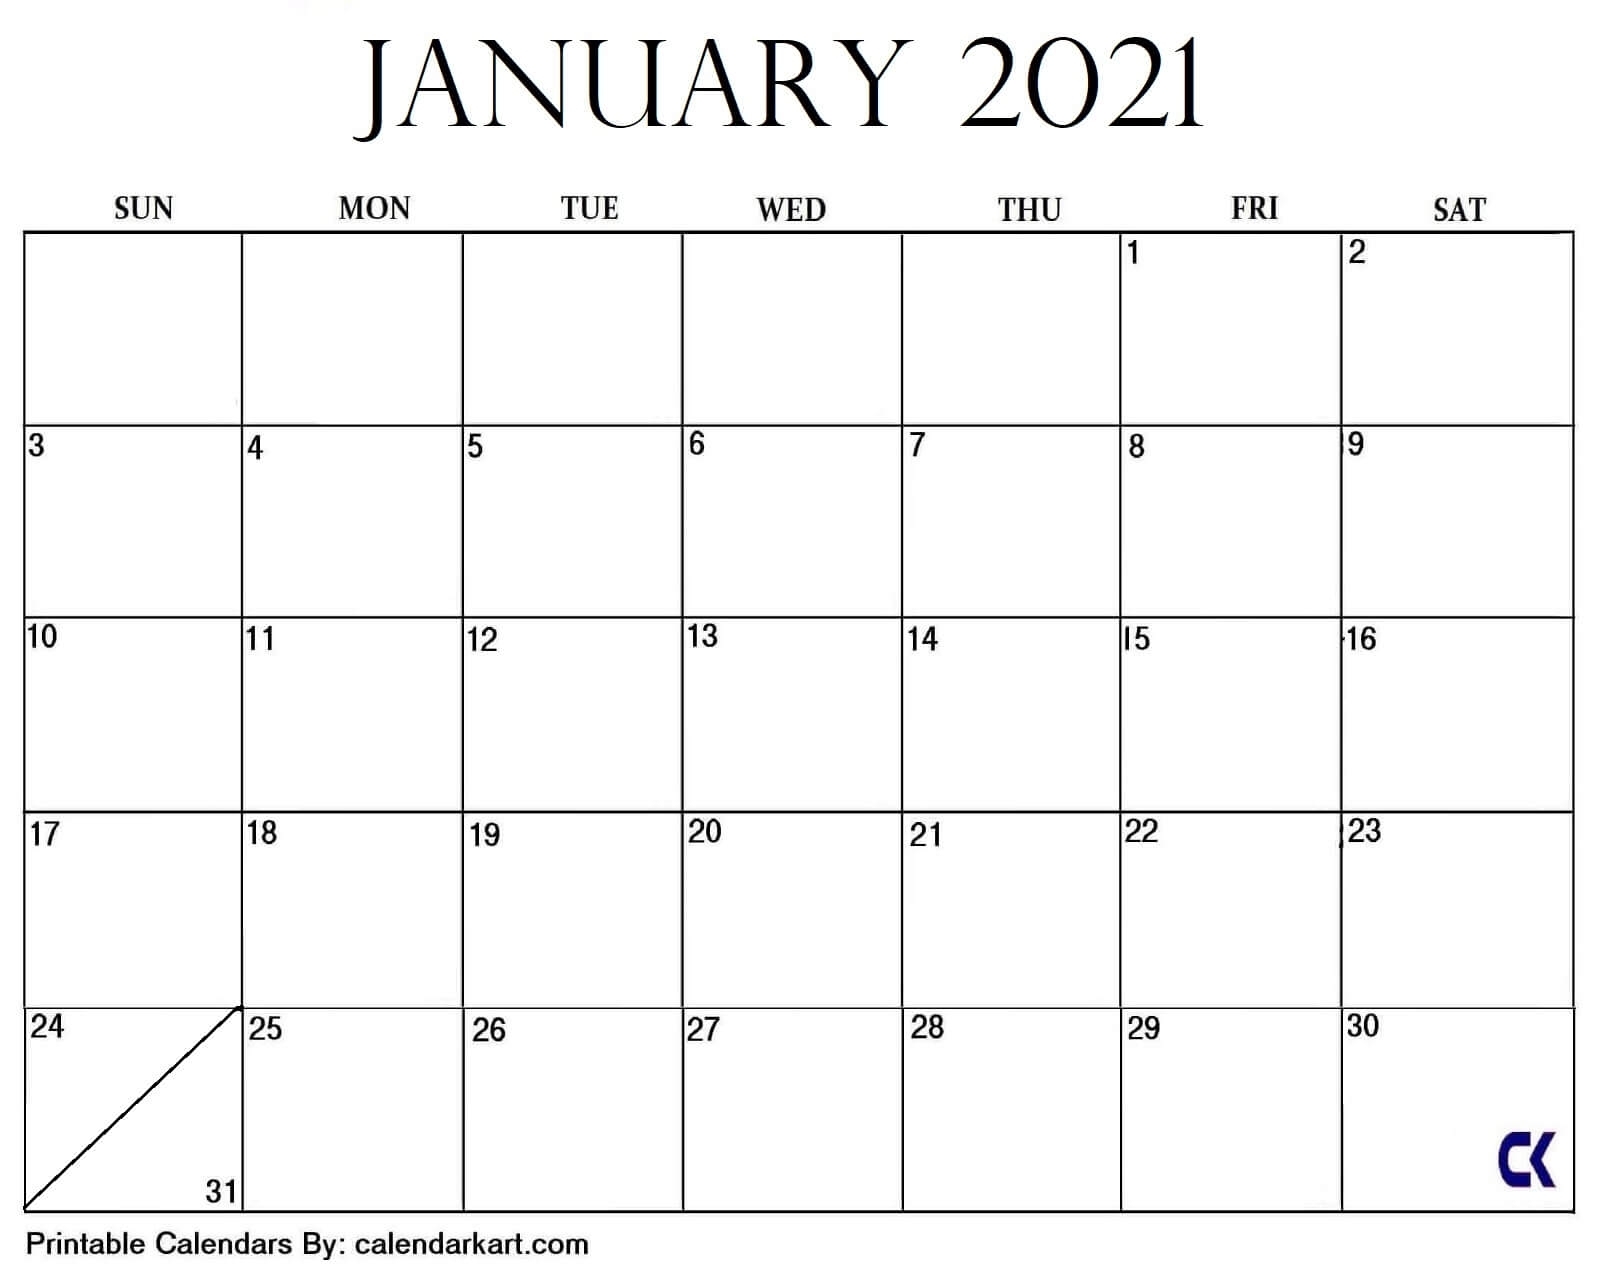 Get January 2021 Blank Calendar Motivated